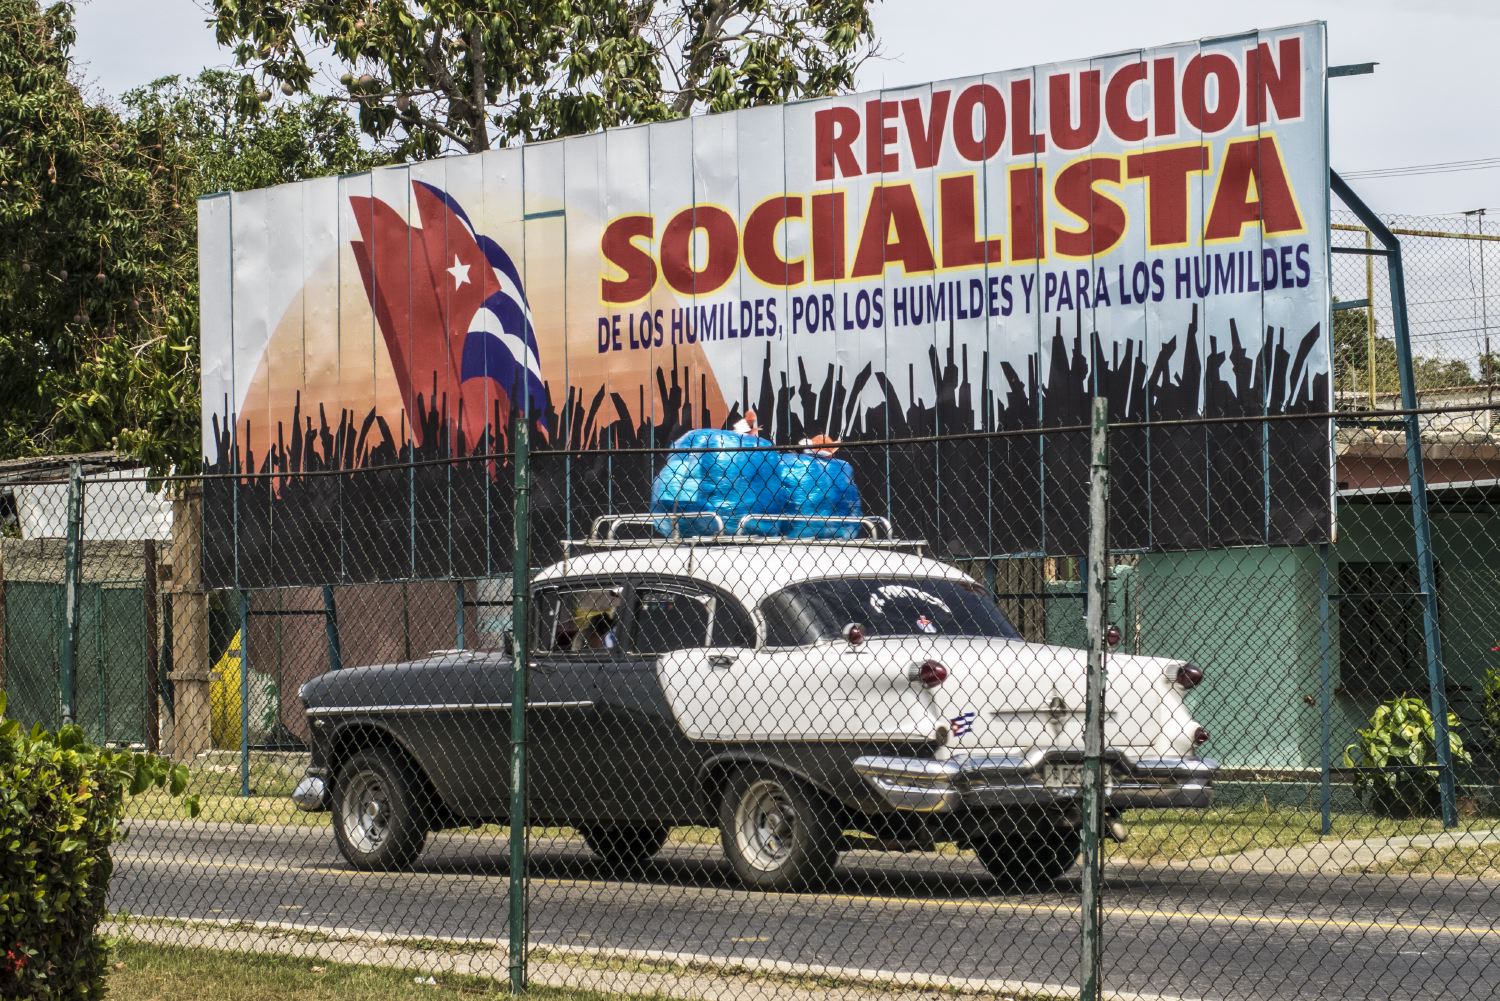 revolucion-socialista-cuba-travel-photographer-michael-benabib.JPG